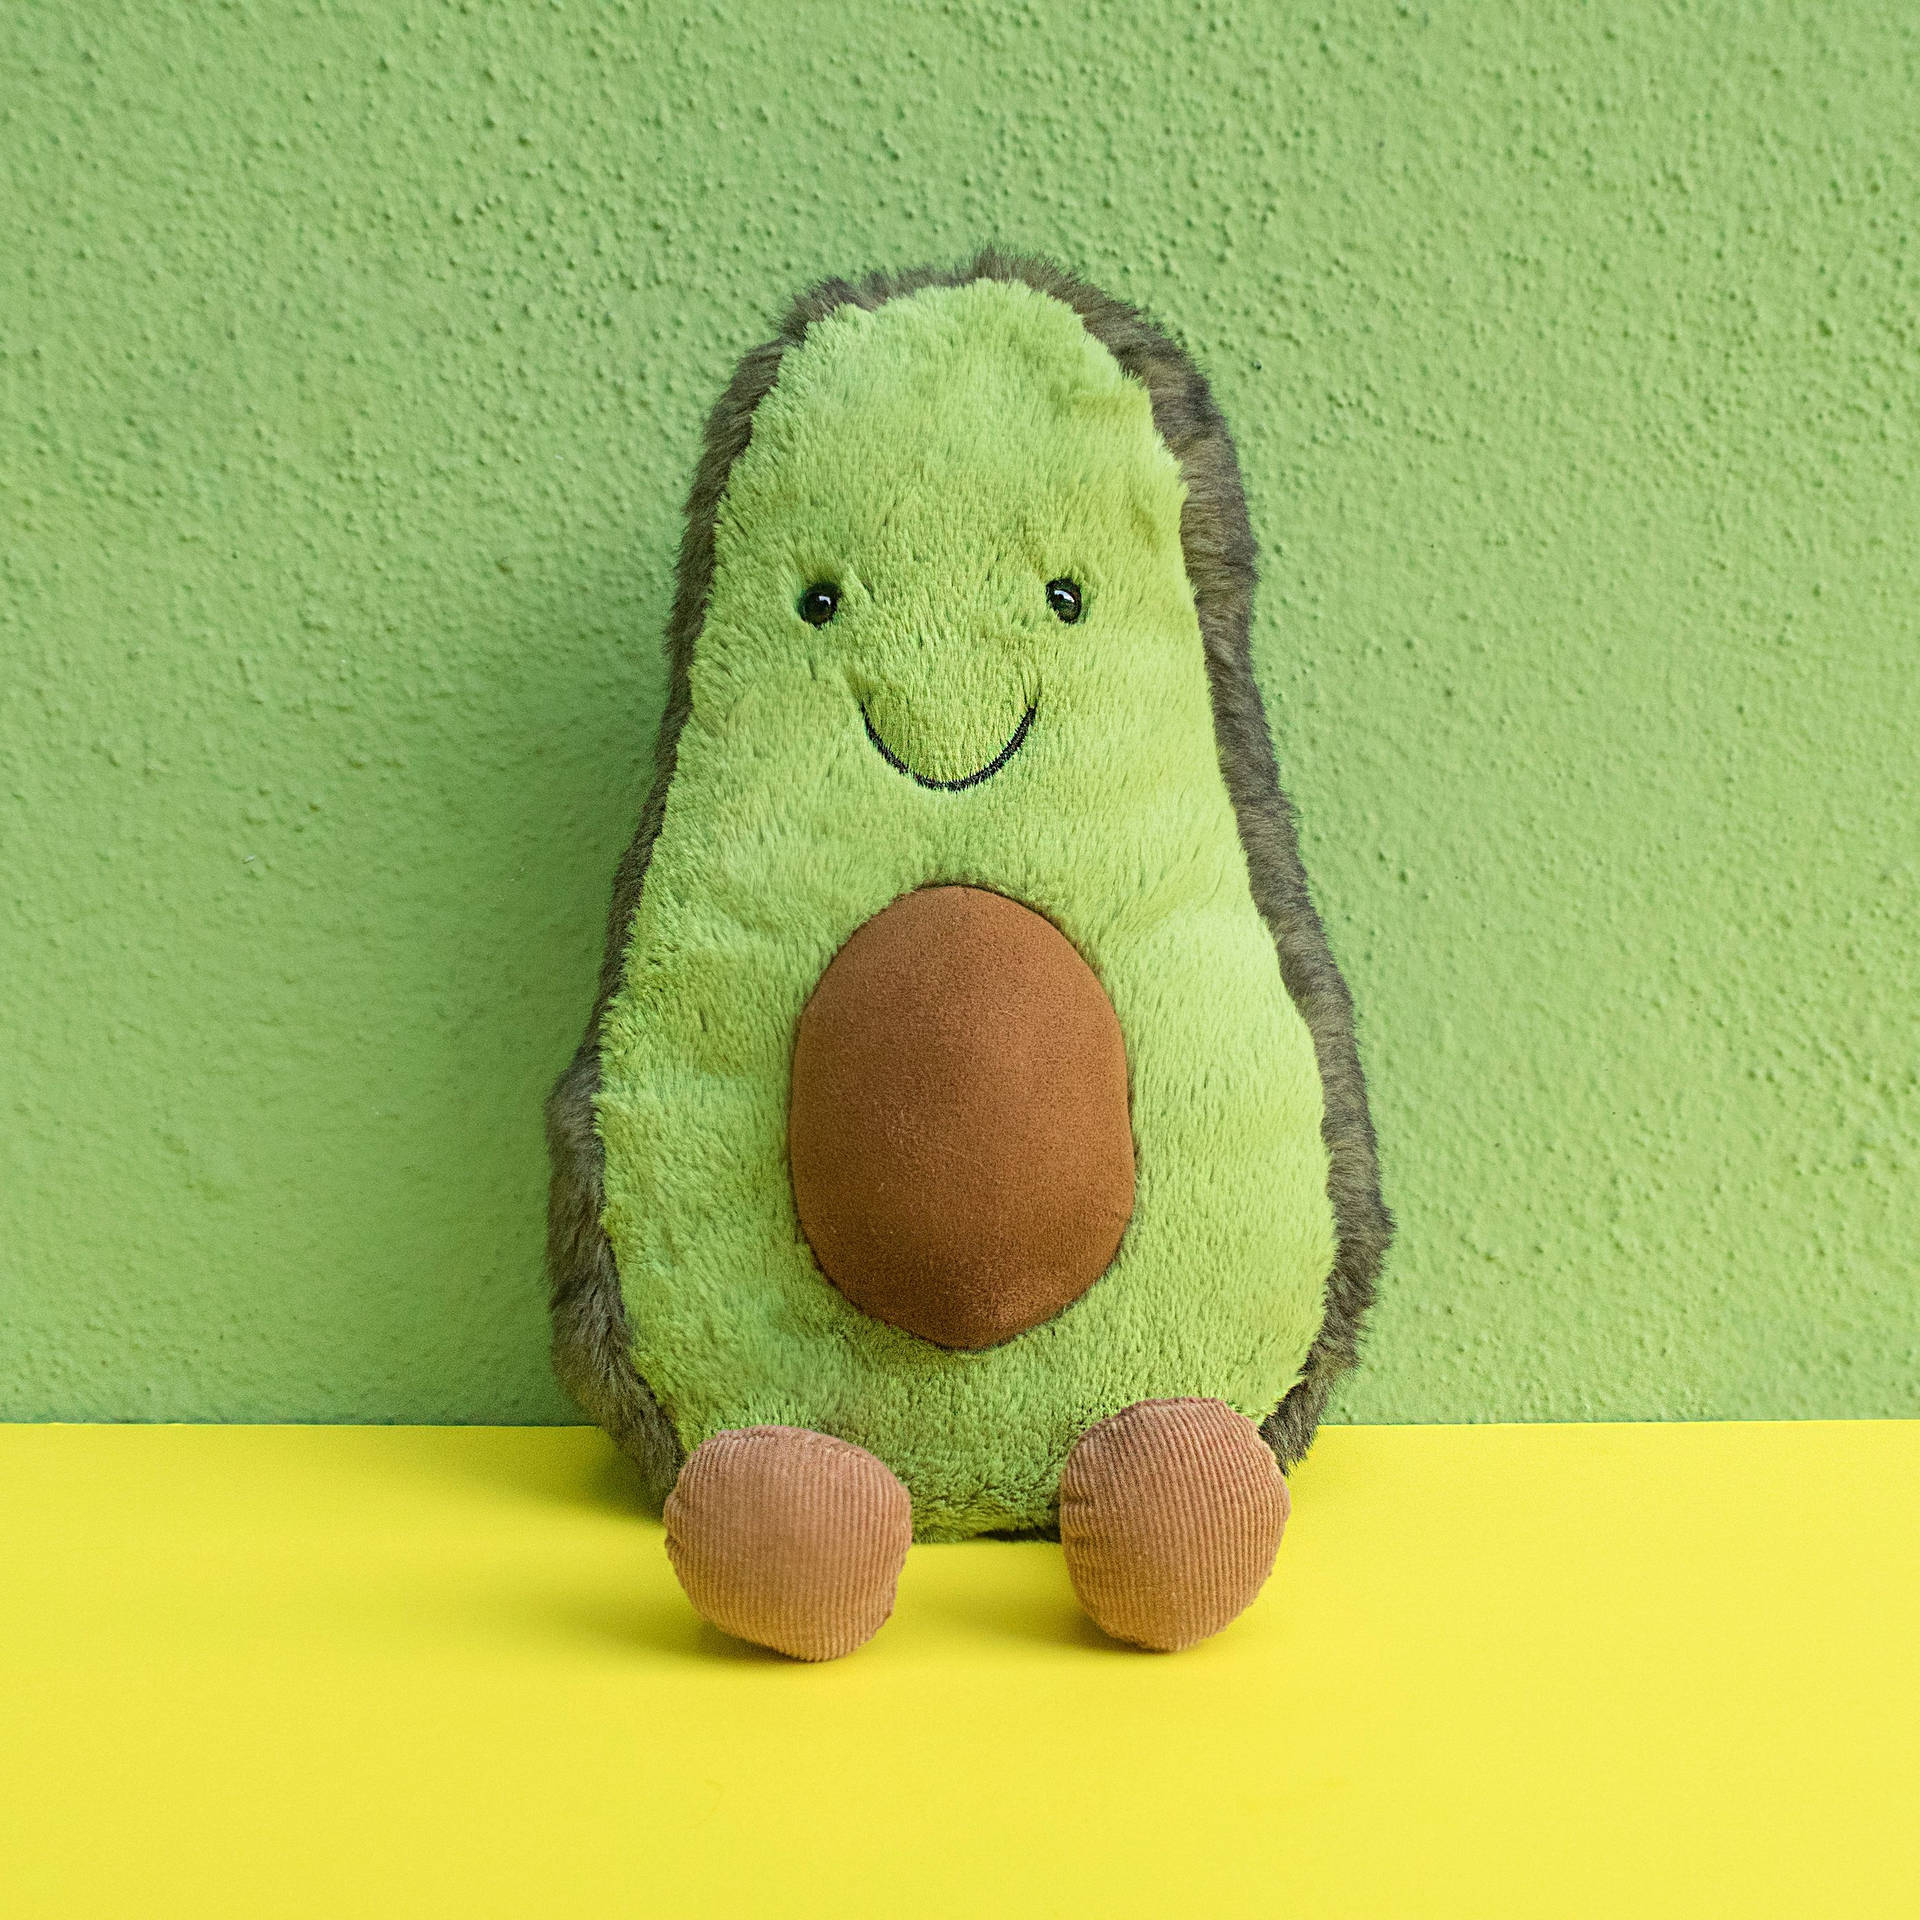 Ipad Pro Cute Avocado Toy Background